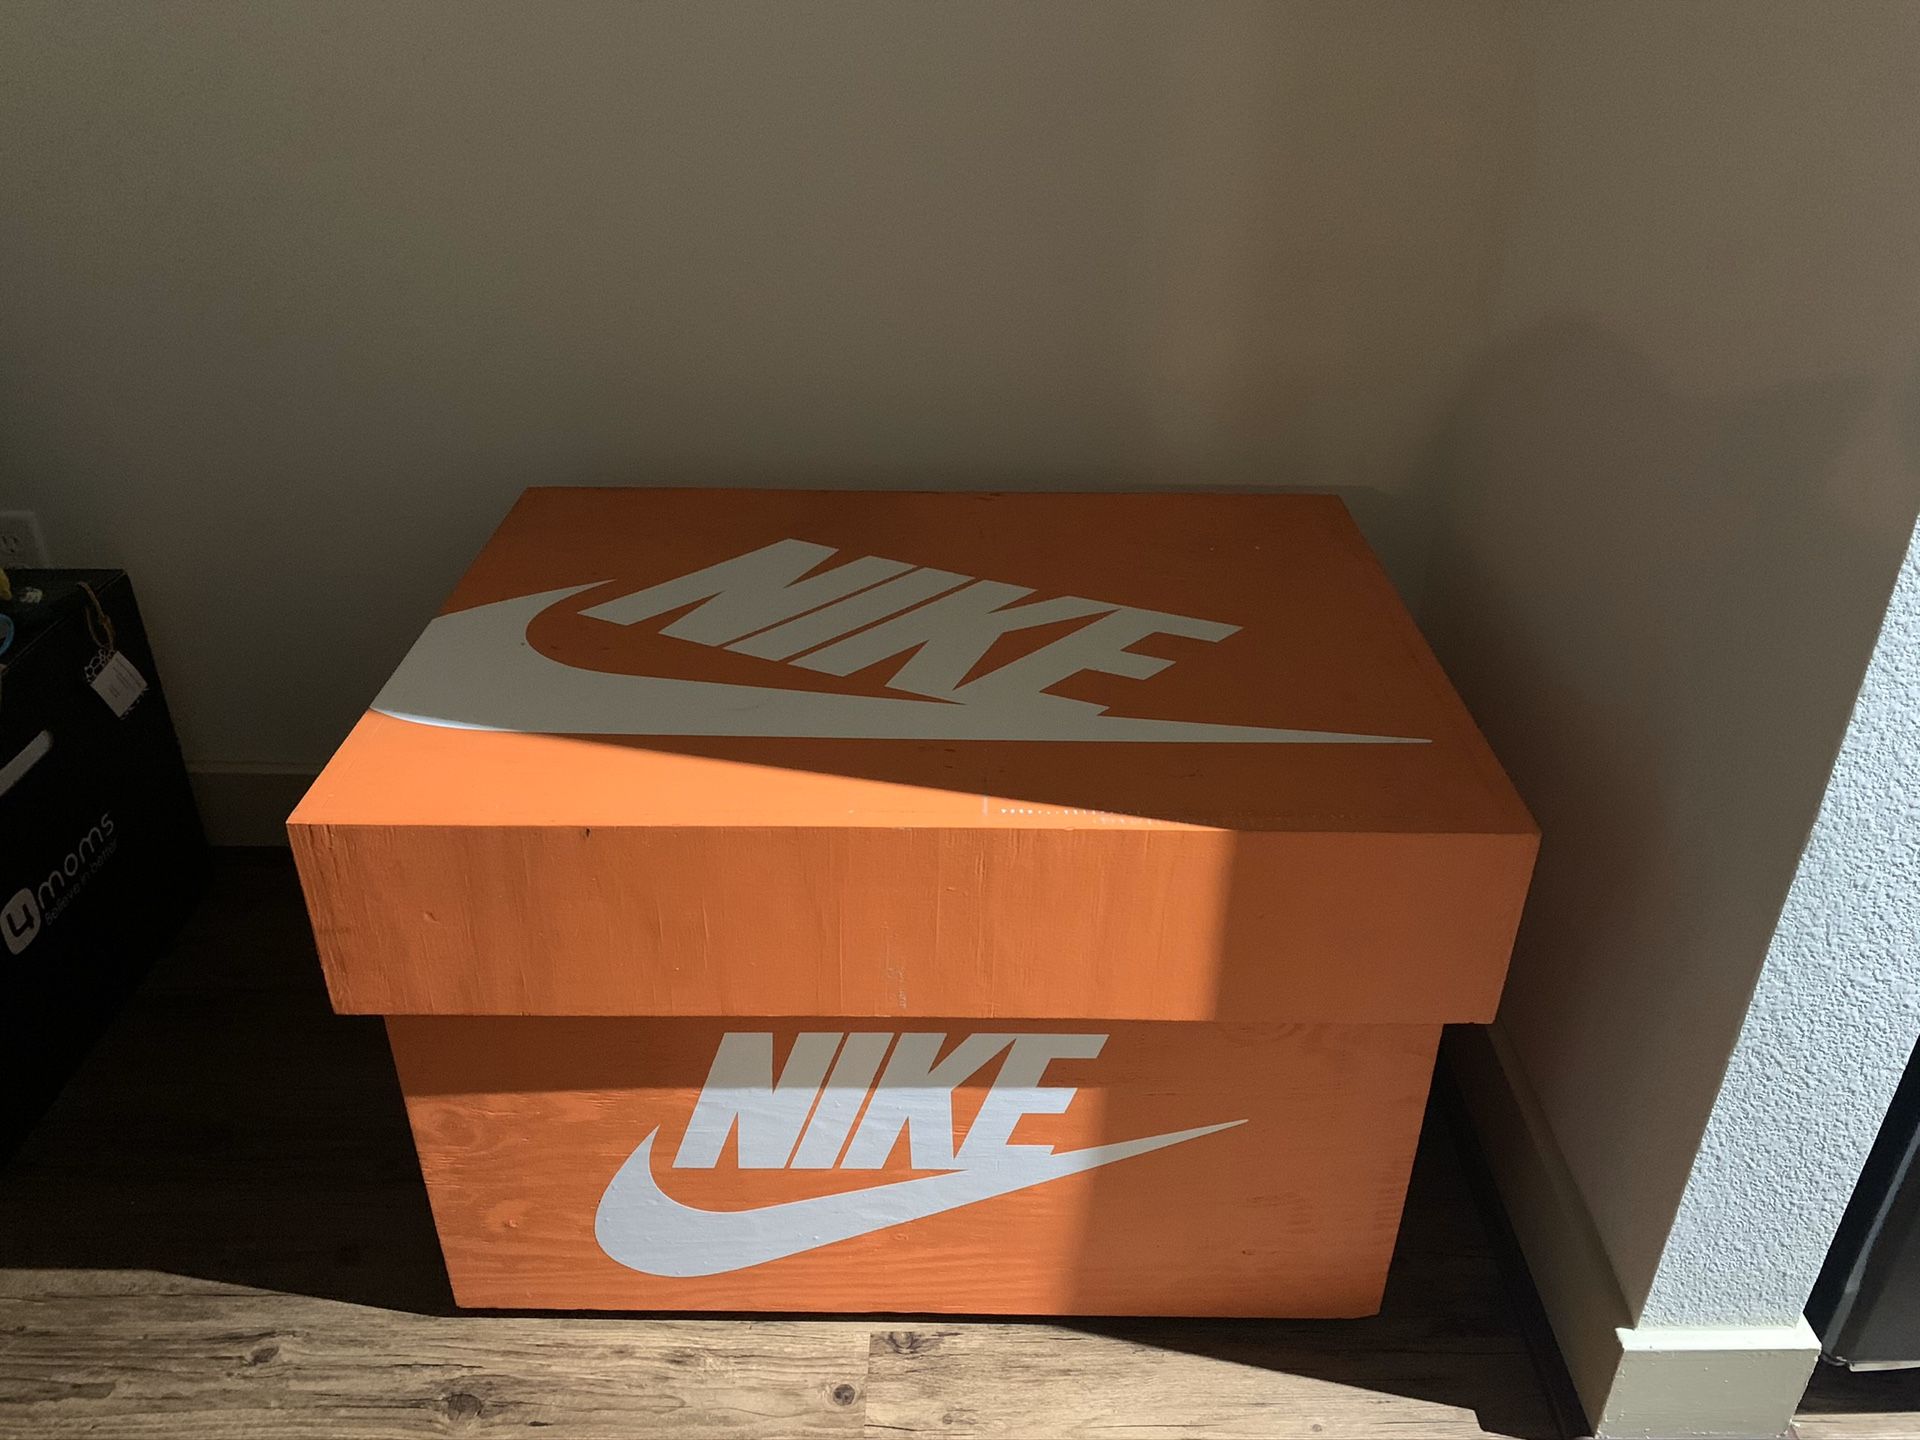 Nike shoe box